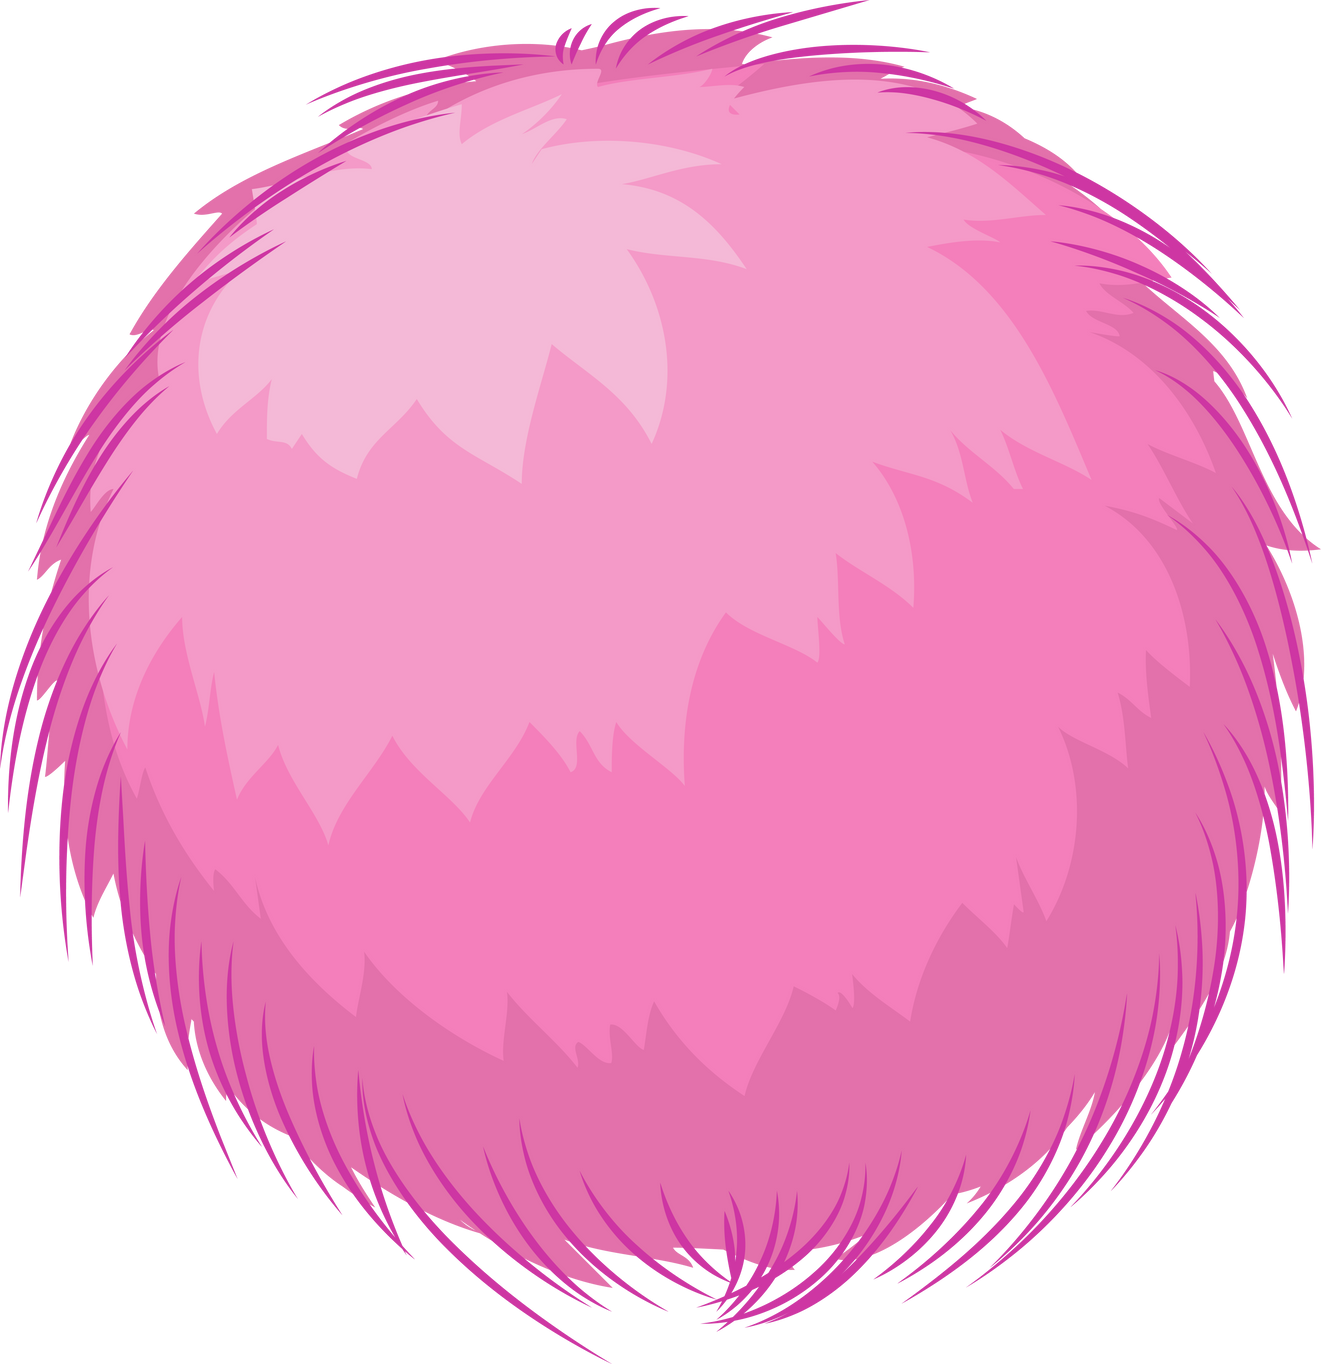 Colorful fluffy pompom fur balls